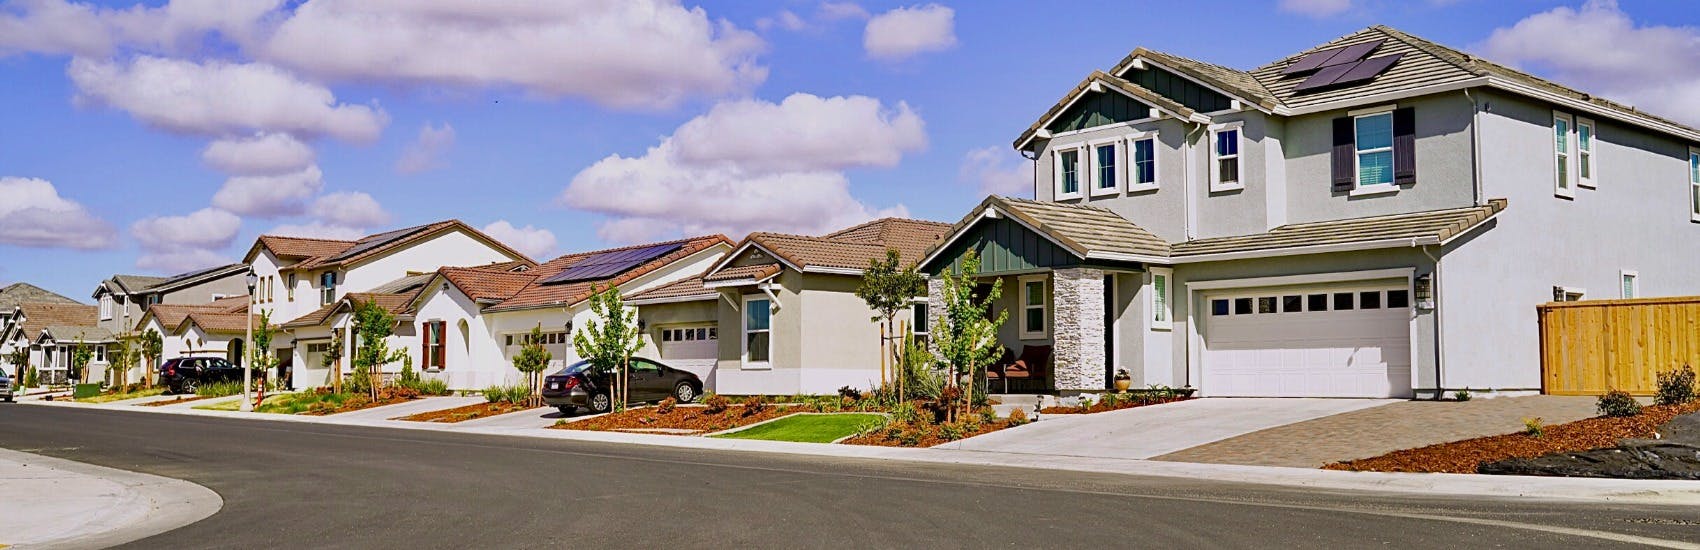 A Californian suburban neighborhood with property-managed rental homes